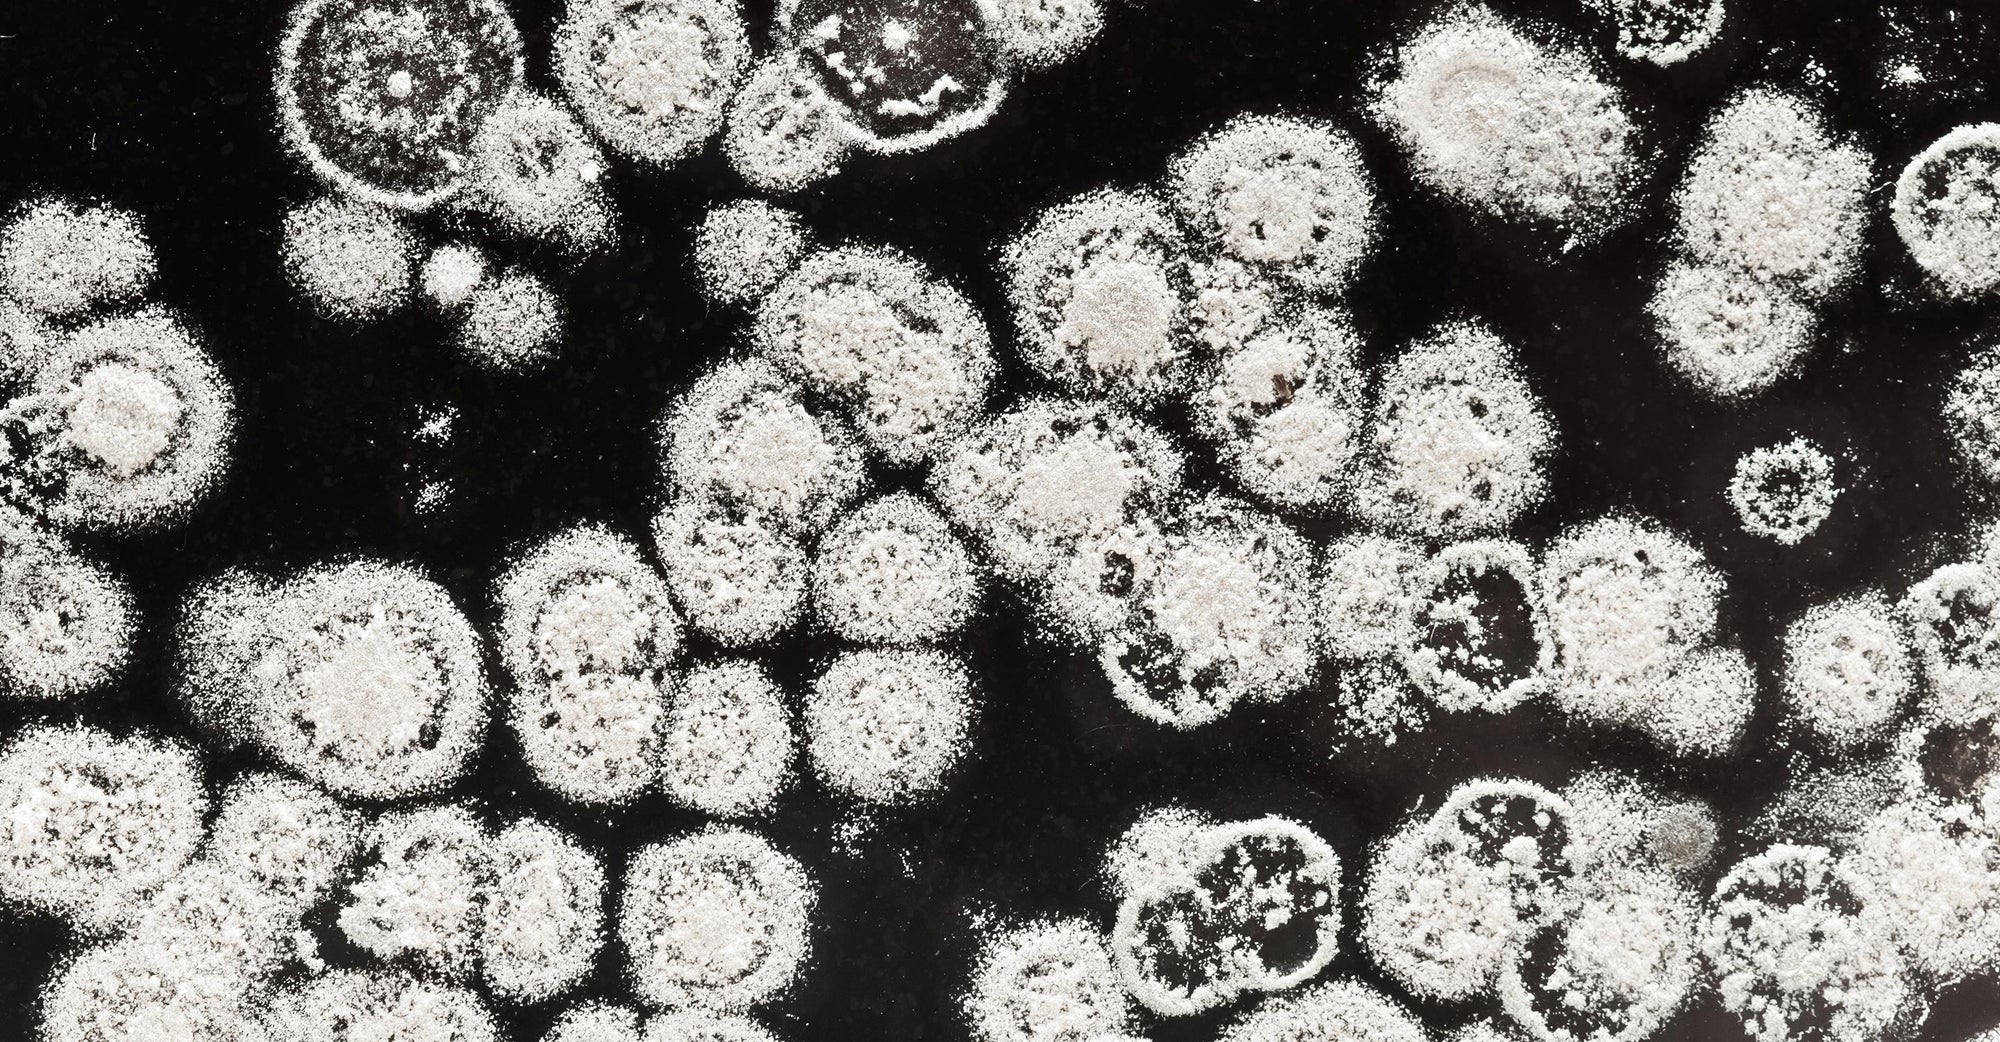 Microscopic image of mold spores